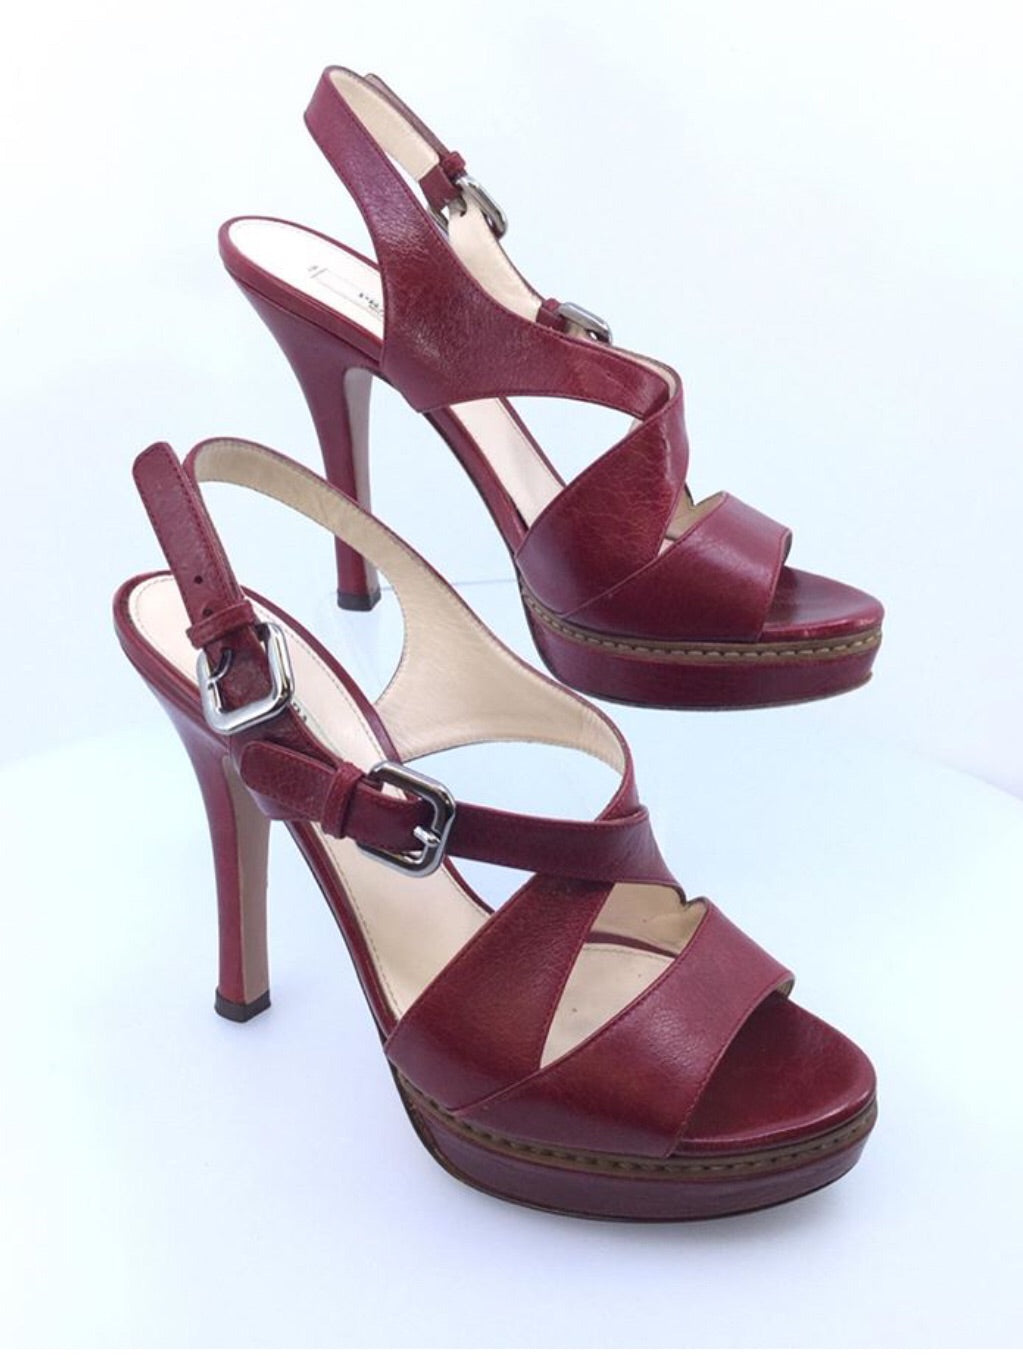 Prada strappy platform high heels Size 38.5